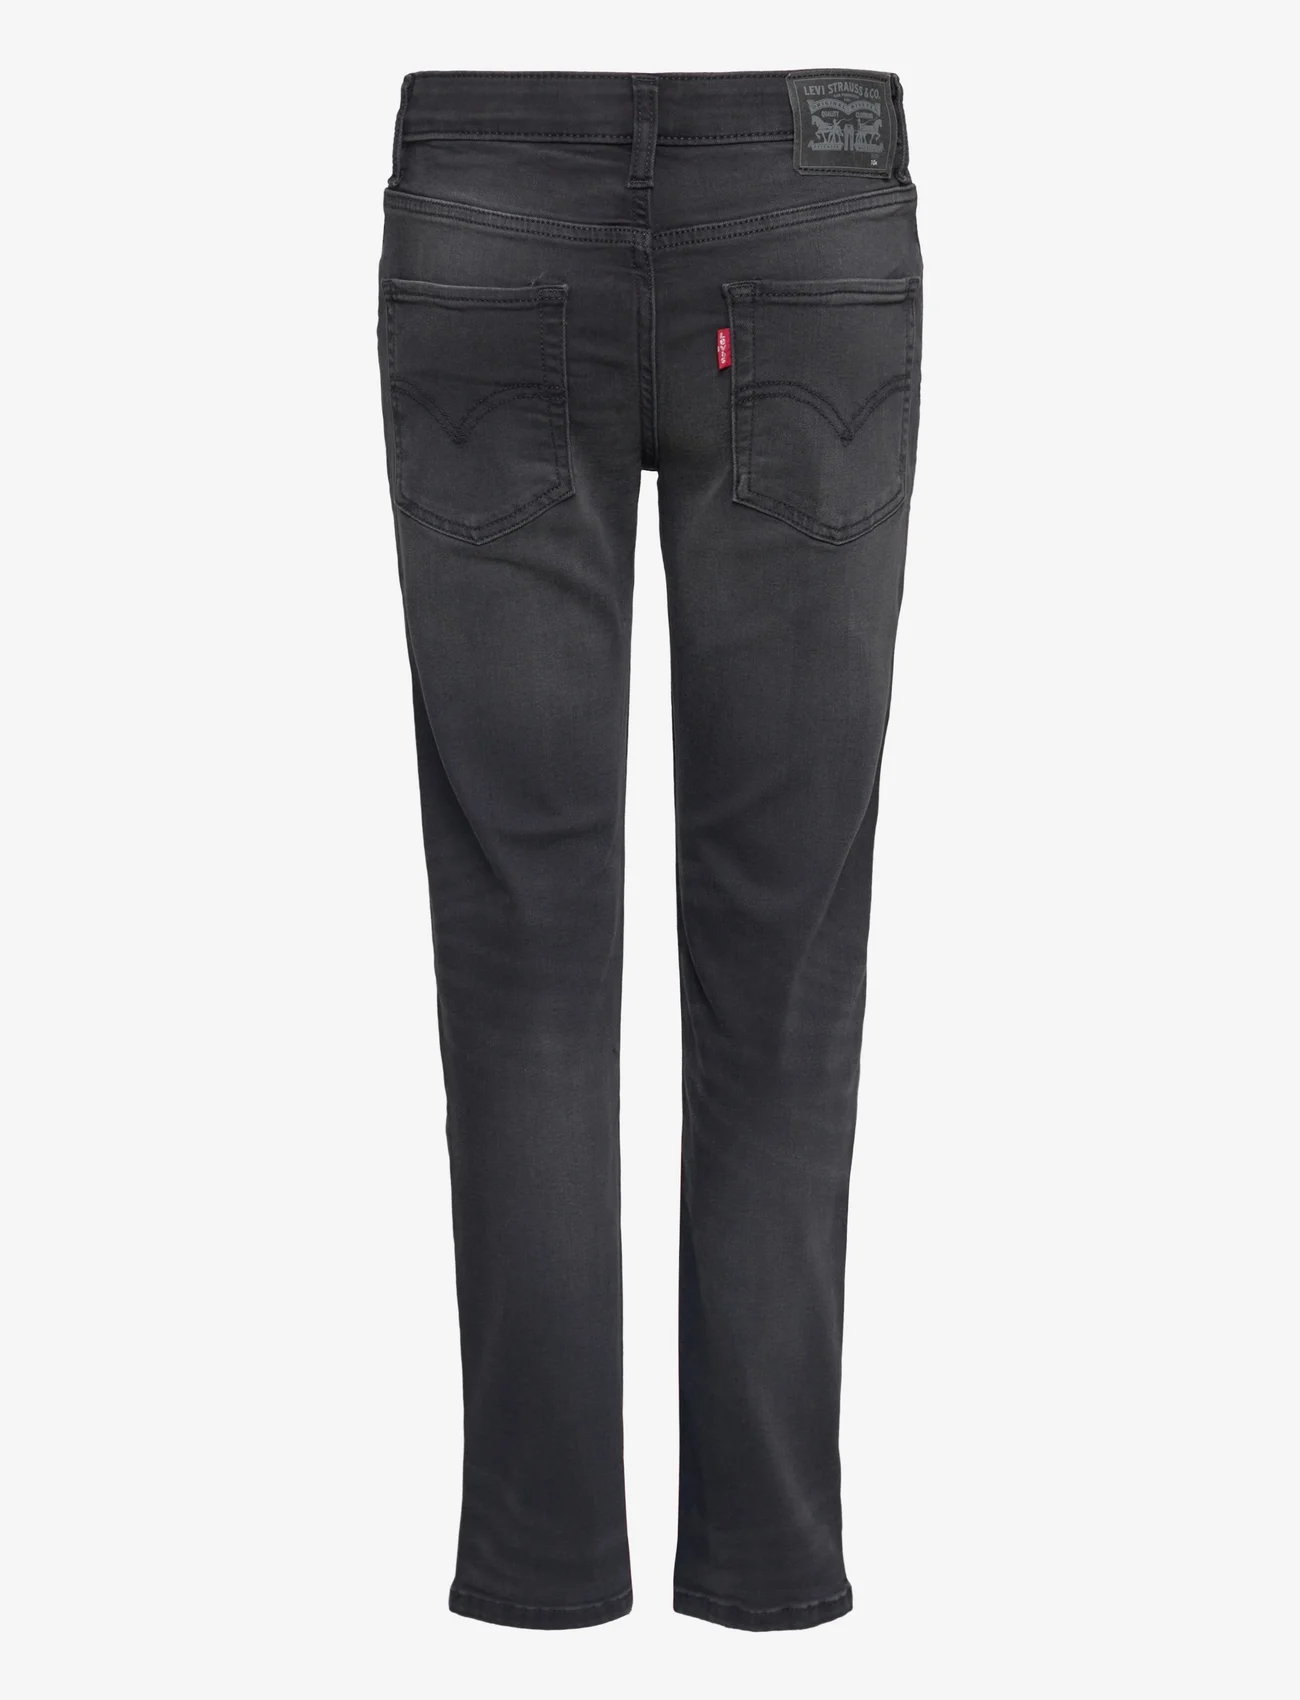 Levi's - Levi's® 511™ Slim Fit Eco Performance Jeans - suorat farkut - grey - 1